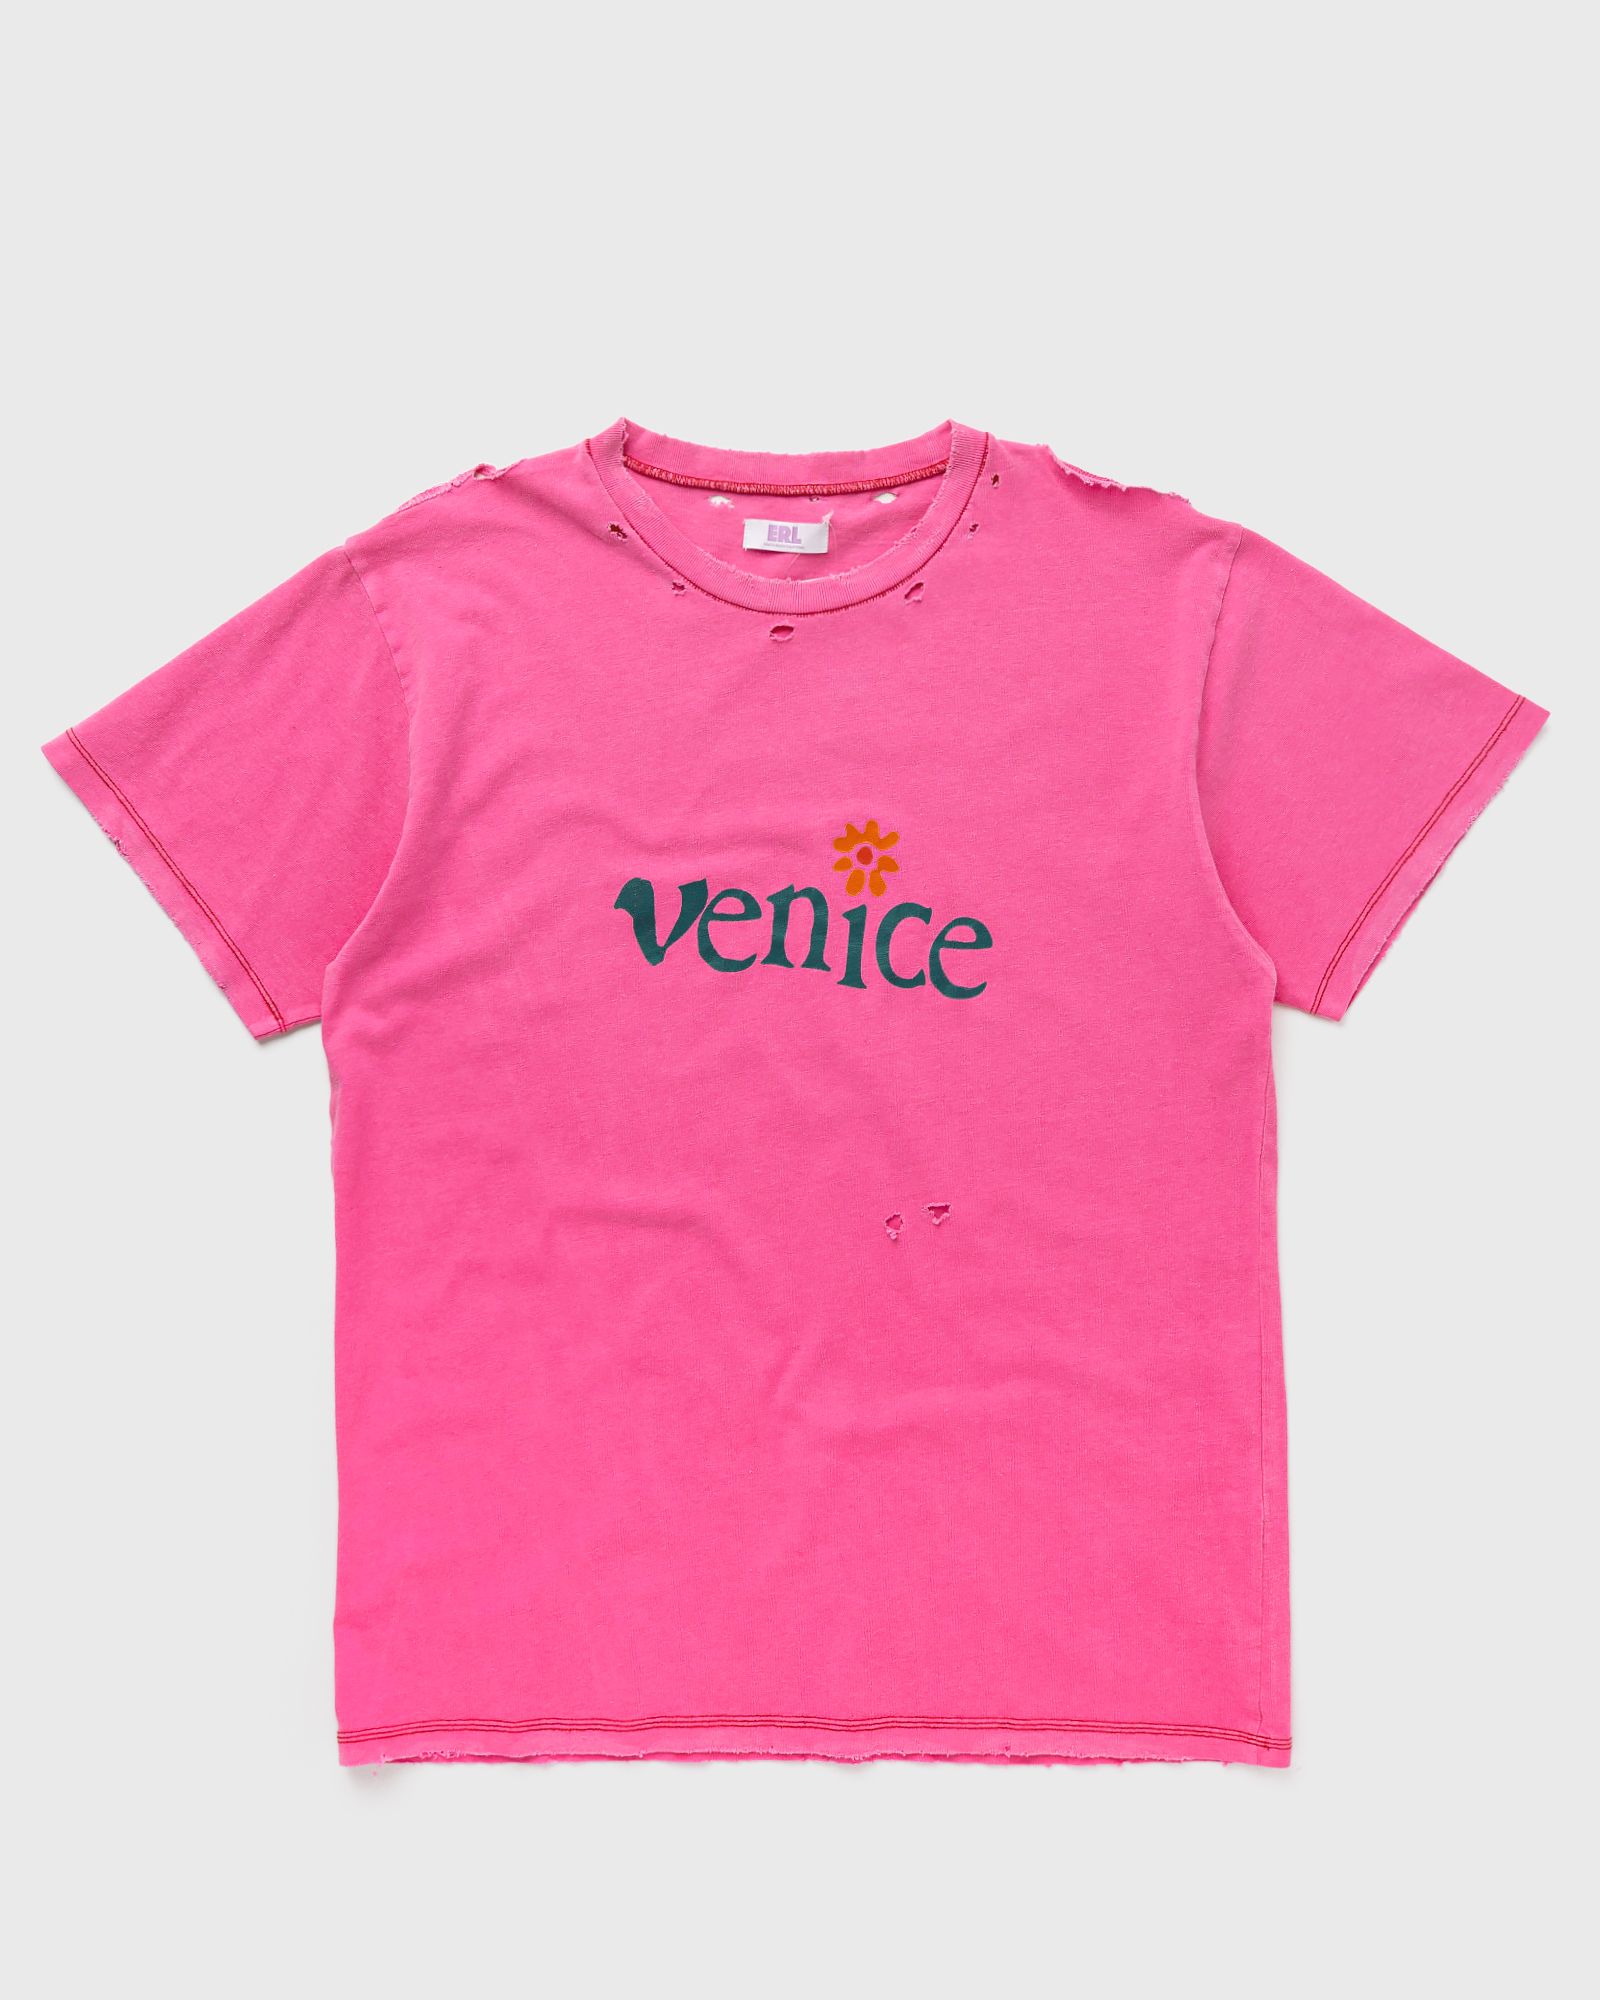 ERL - venice tee knit men shortsleeves pink in größe:xxl